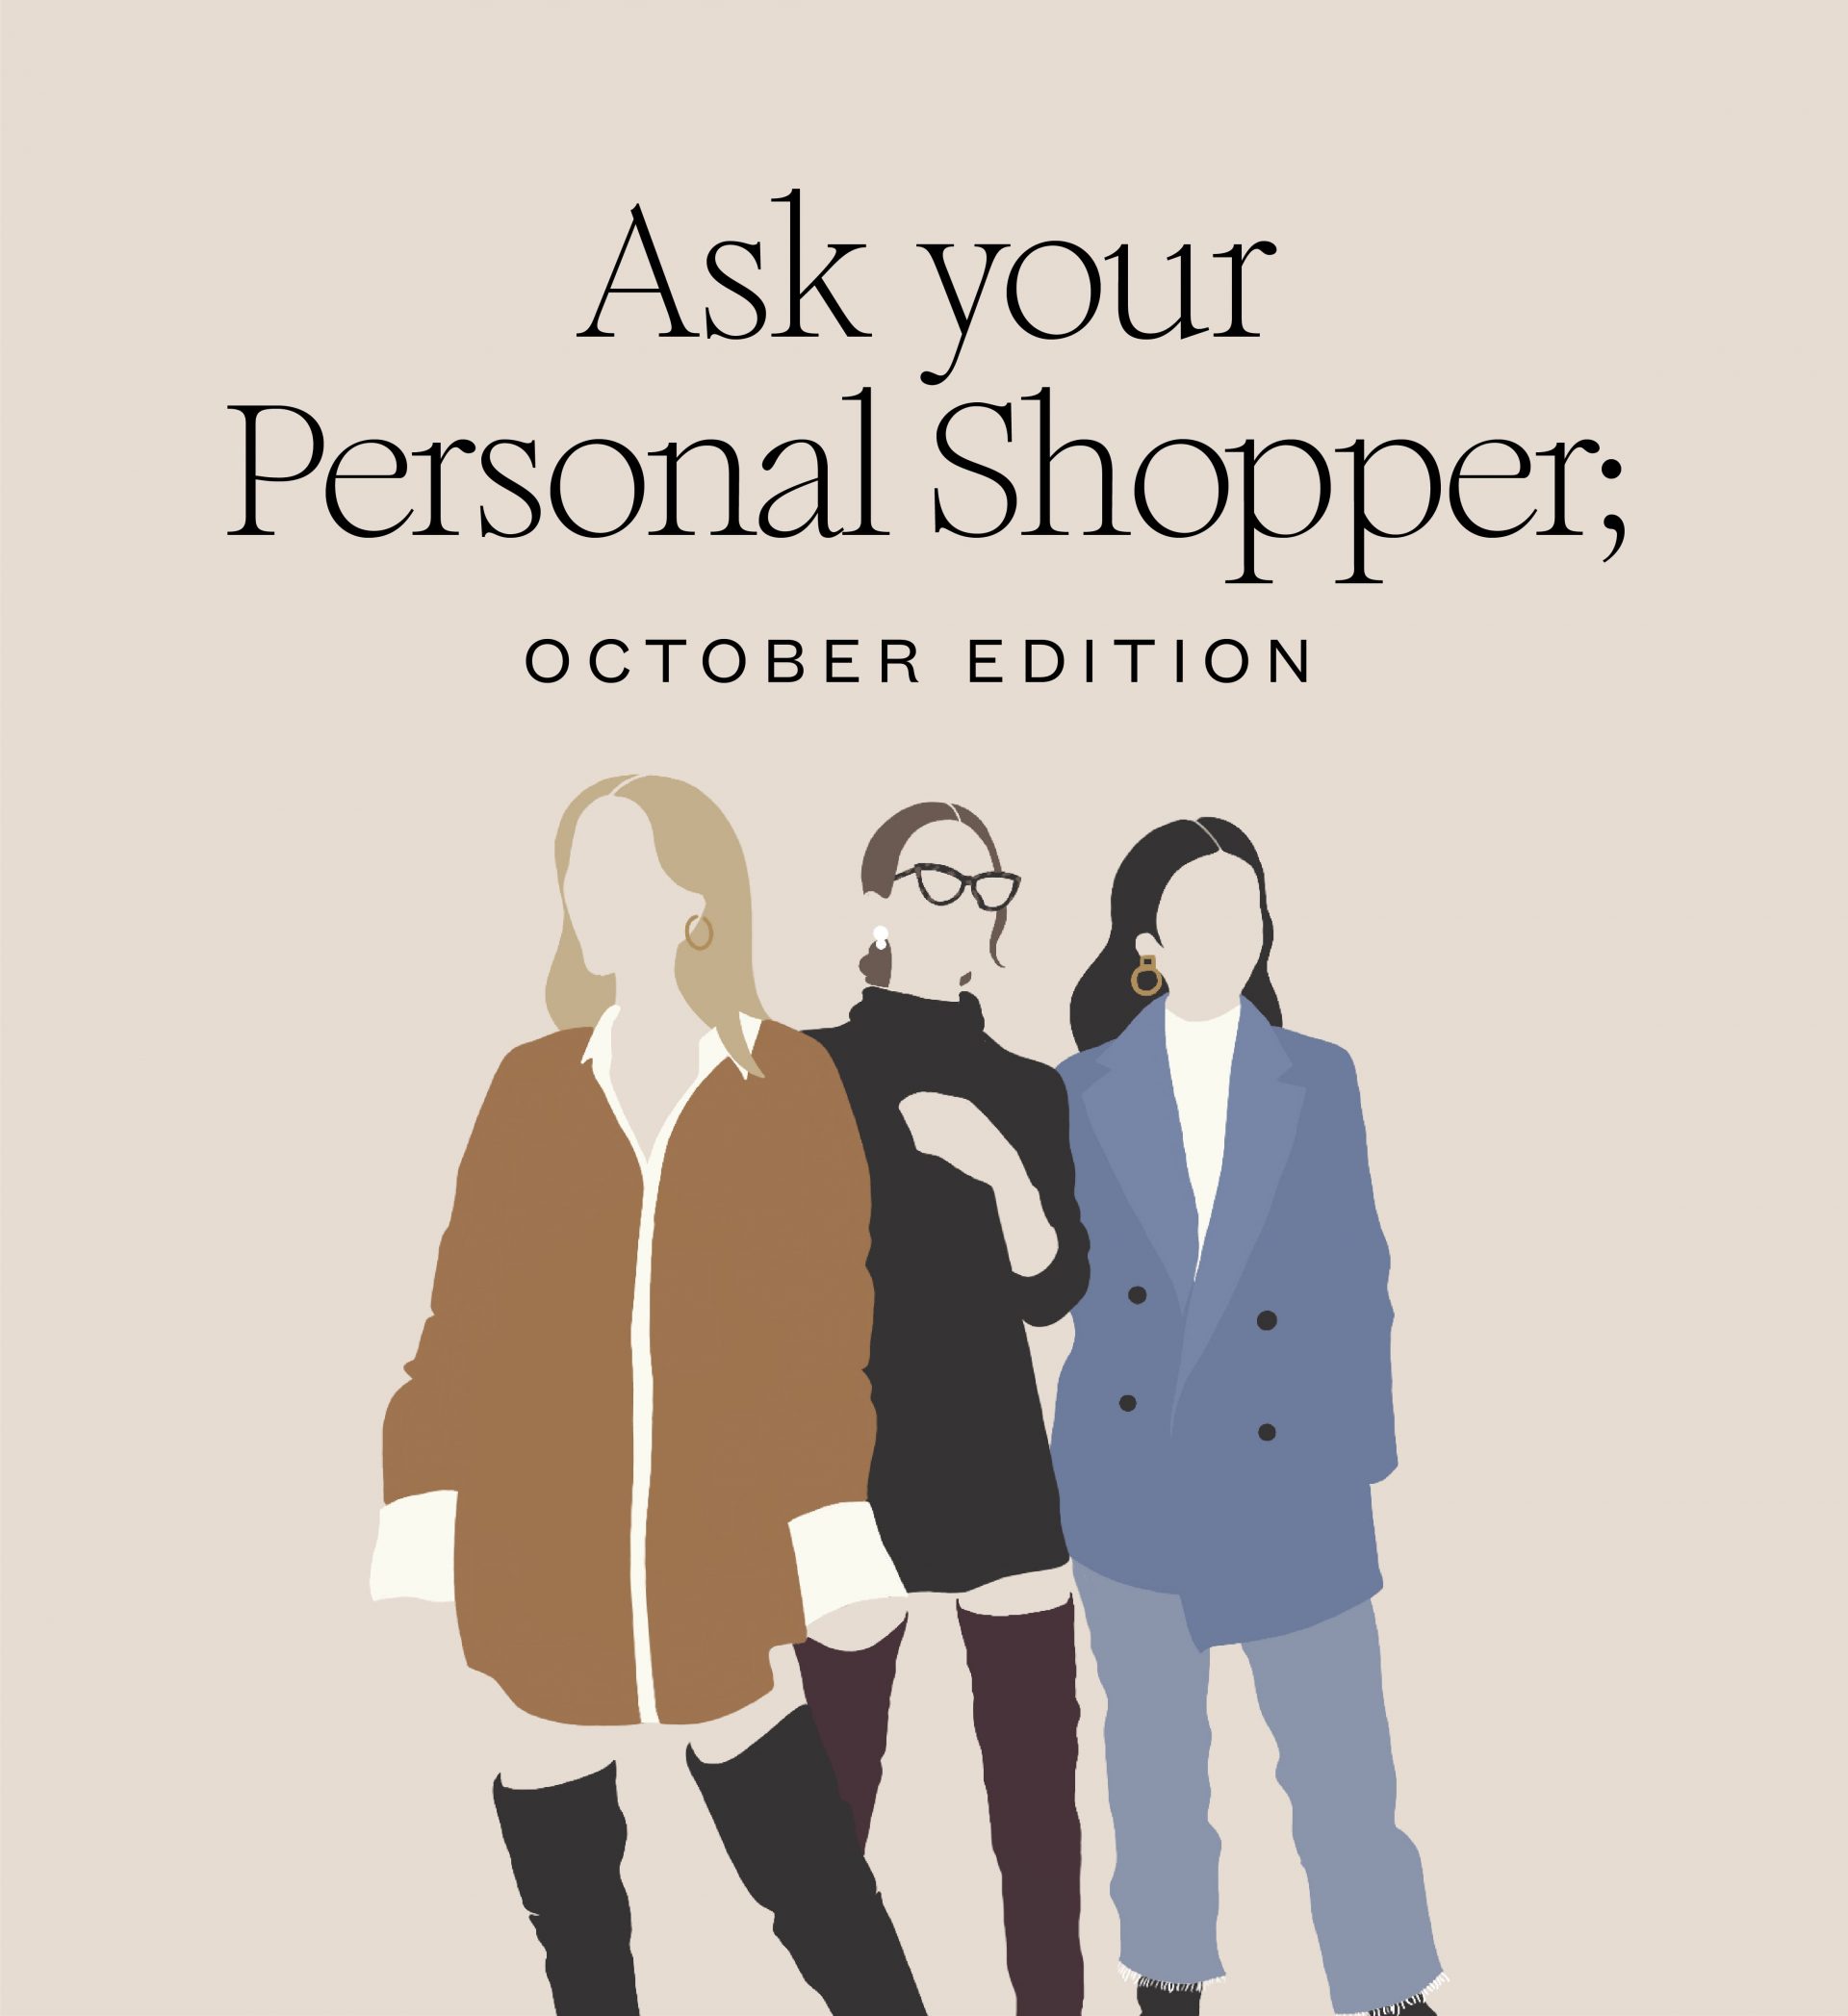 Chiedi alle nostre Personal Shoppers